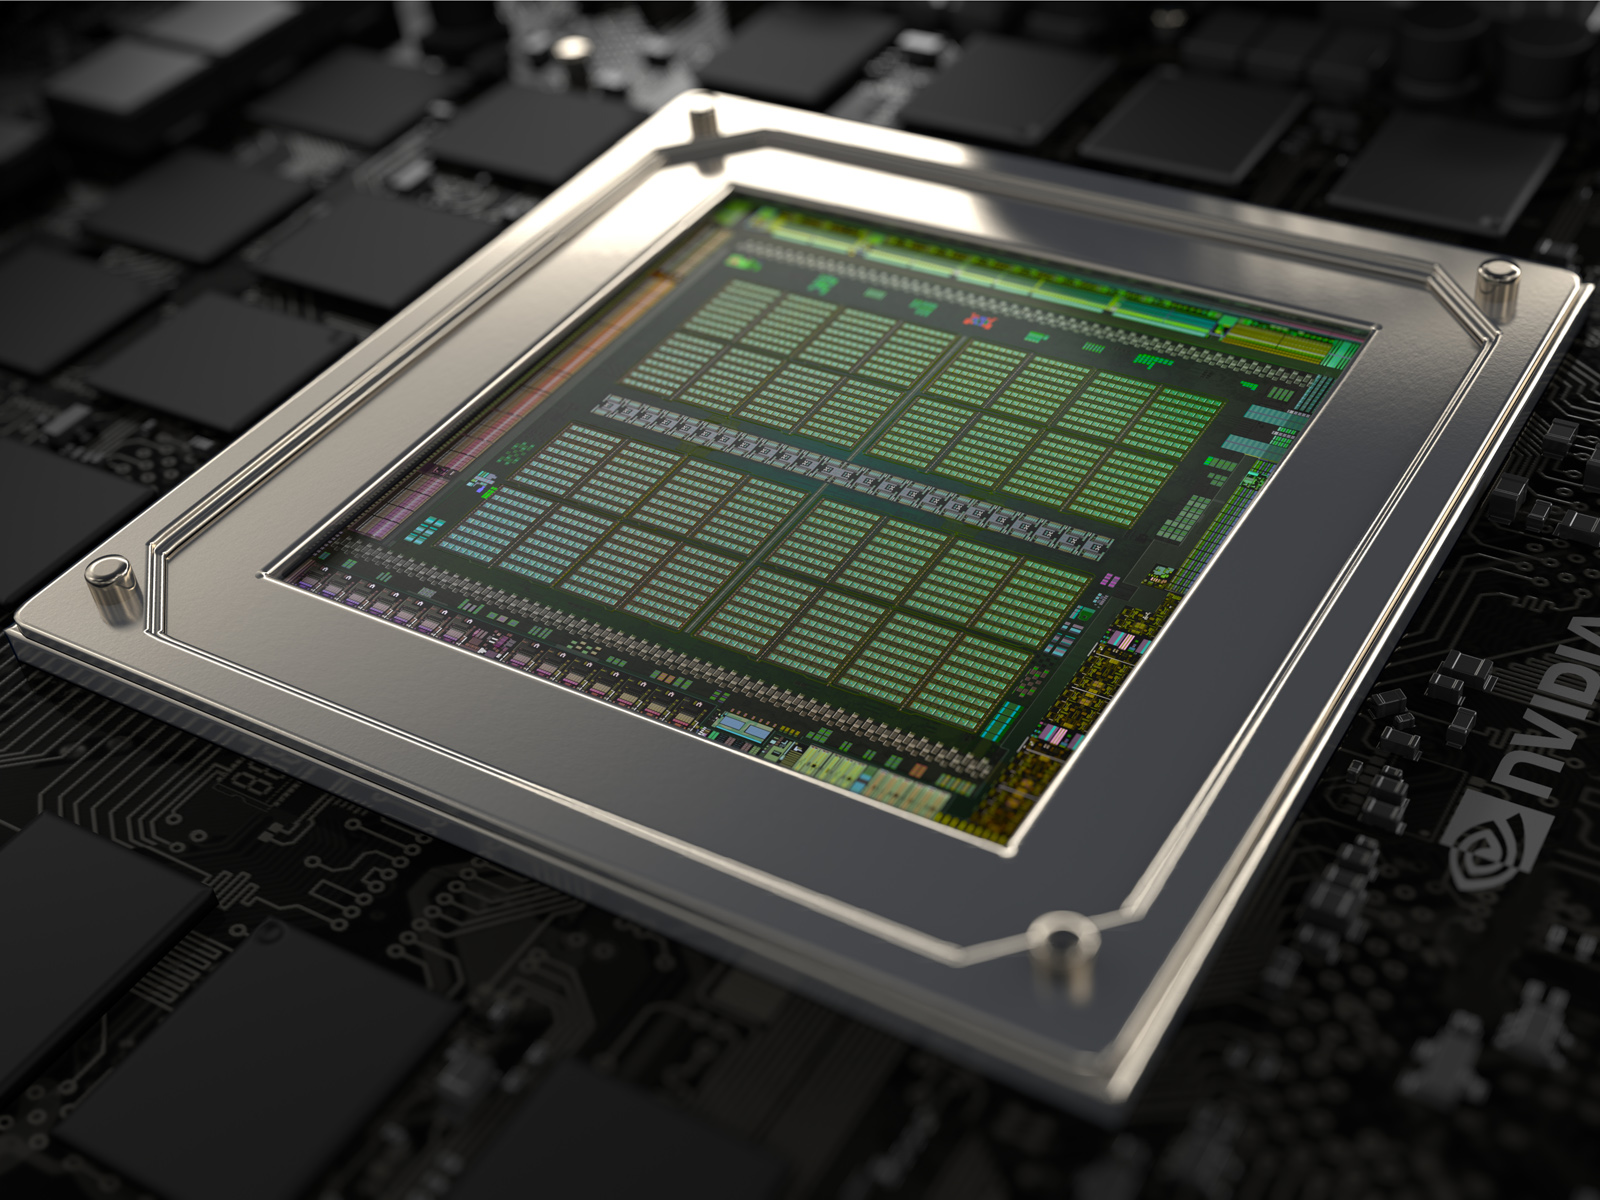 Nvidia GeForce GTX 970M